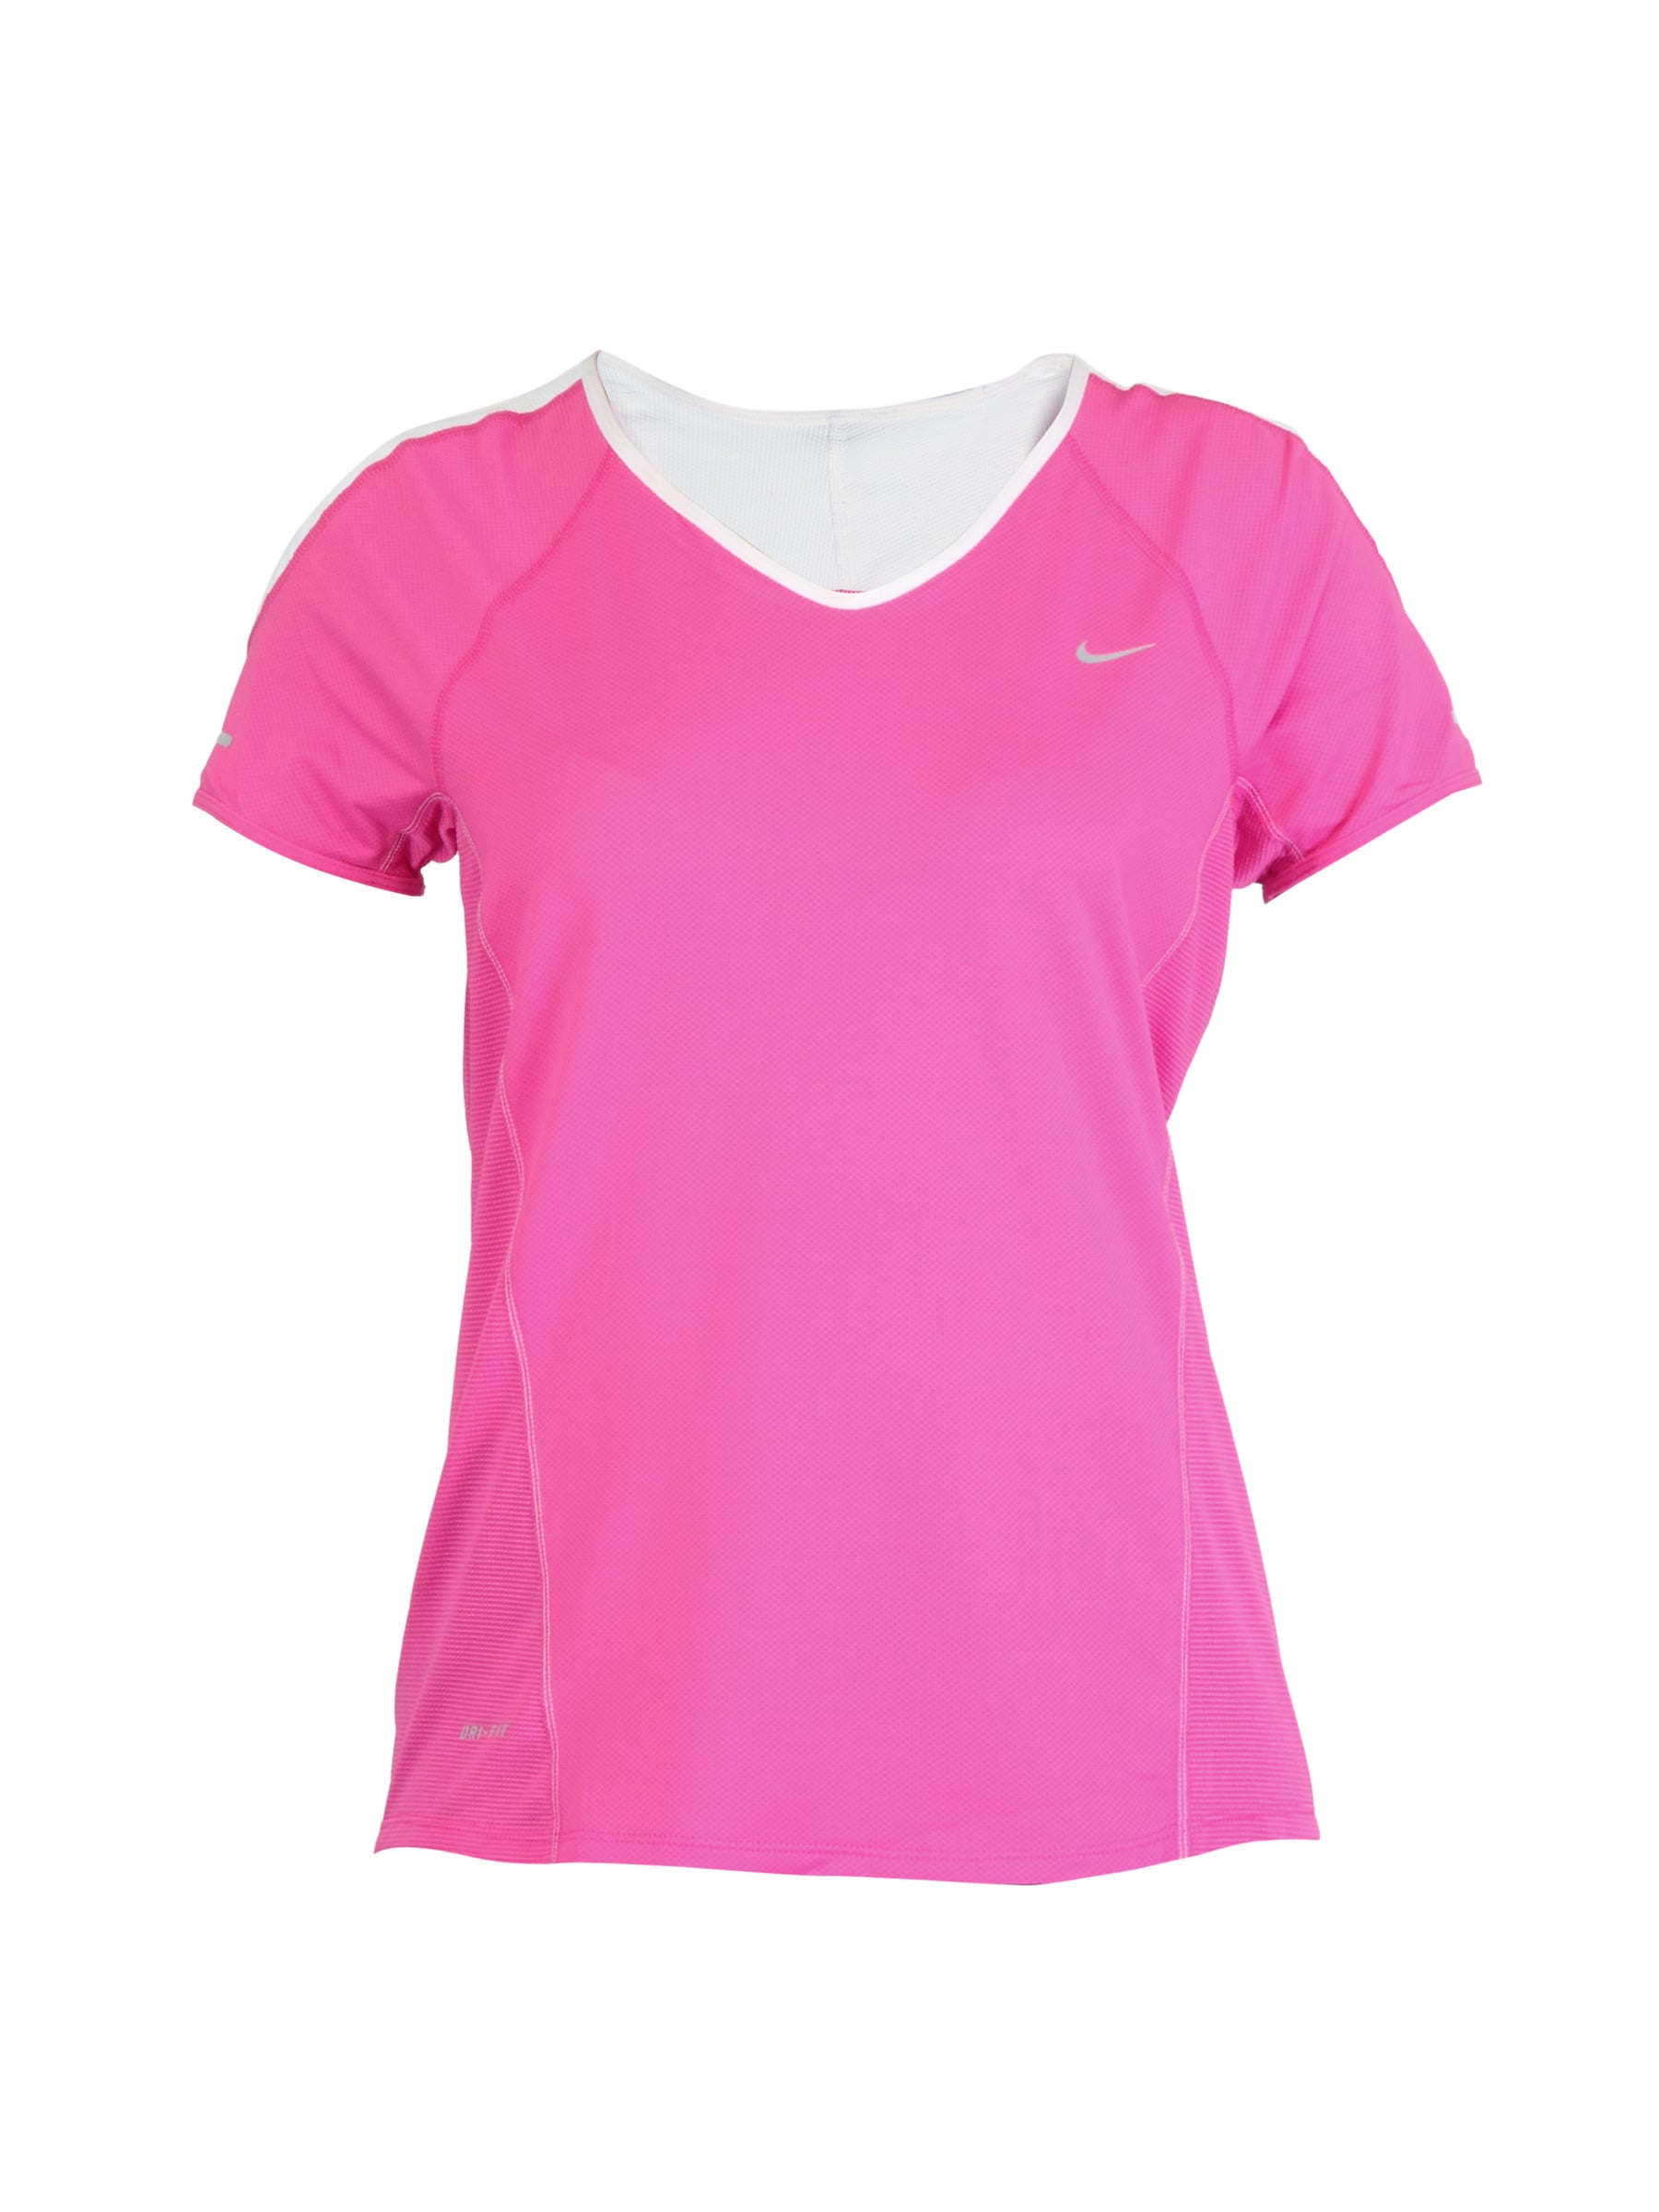 Nike Women Sphere Pink T-shirt